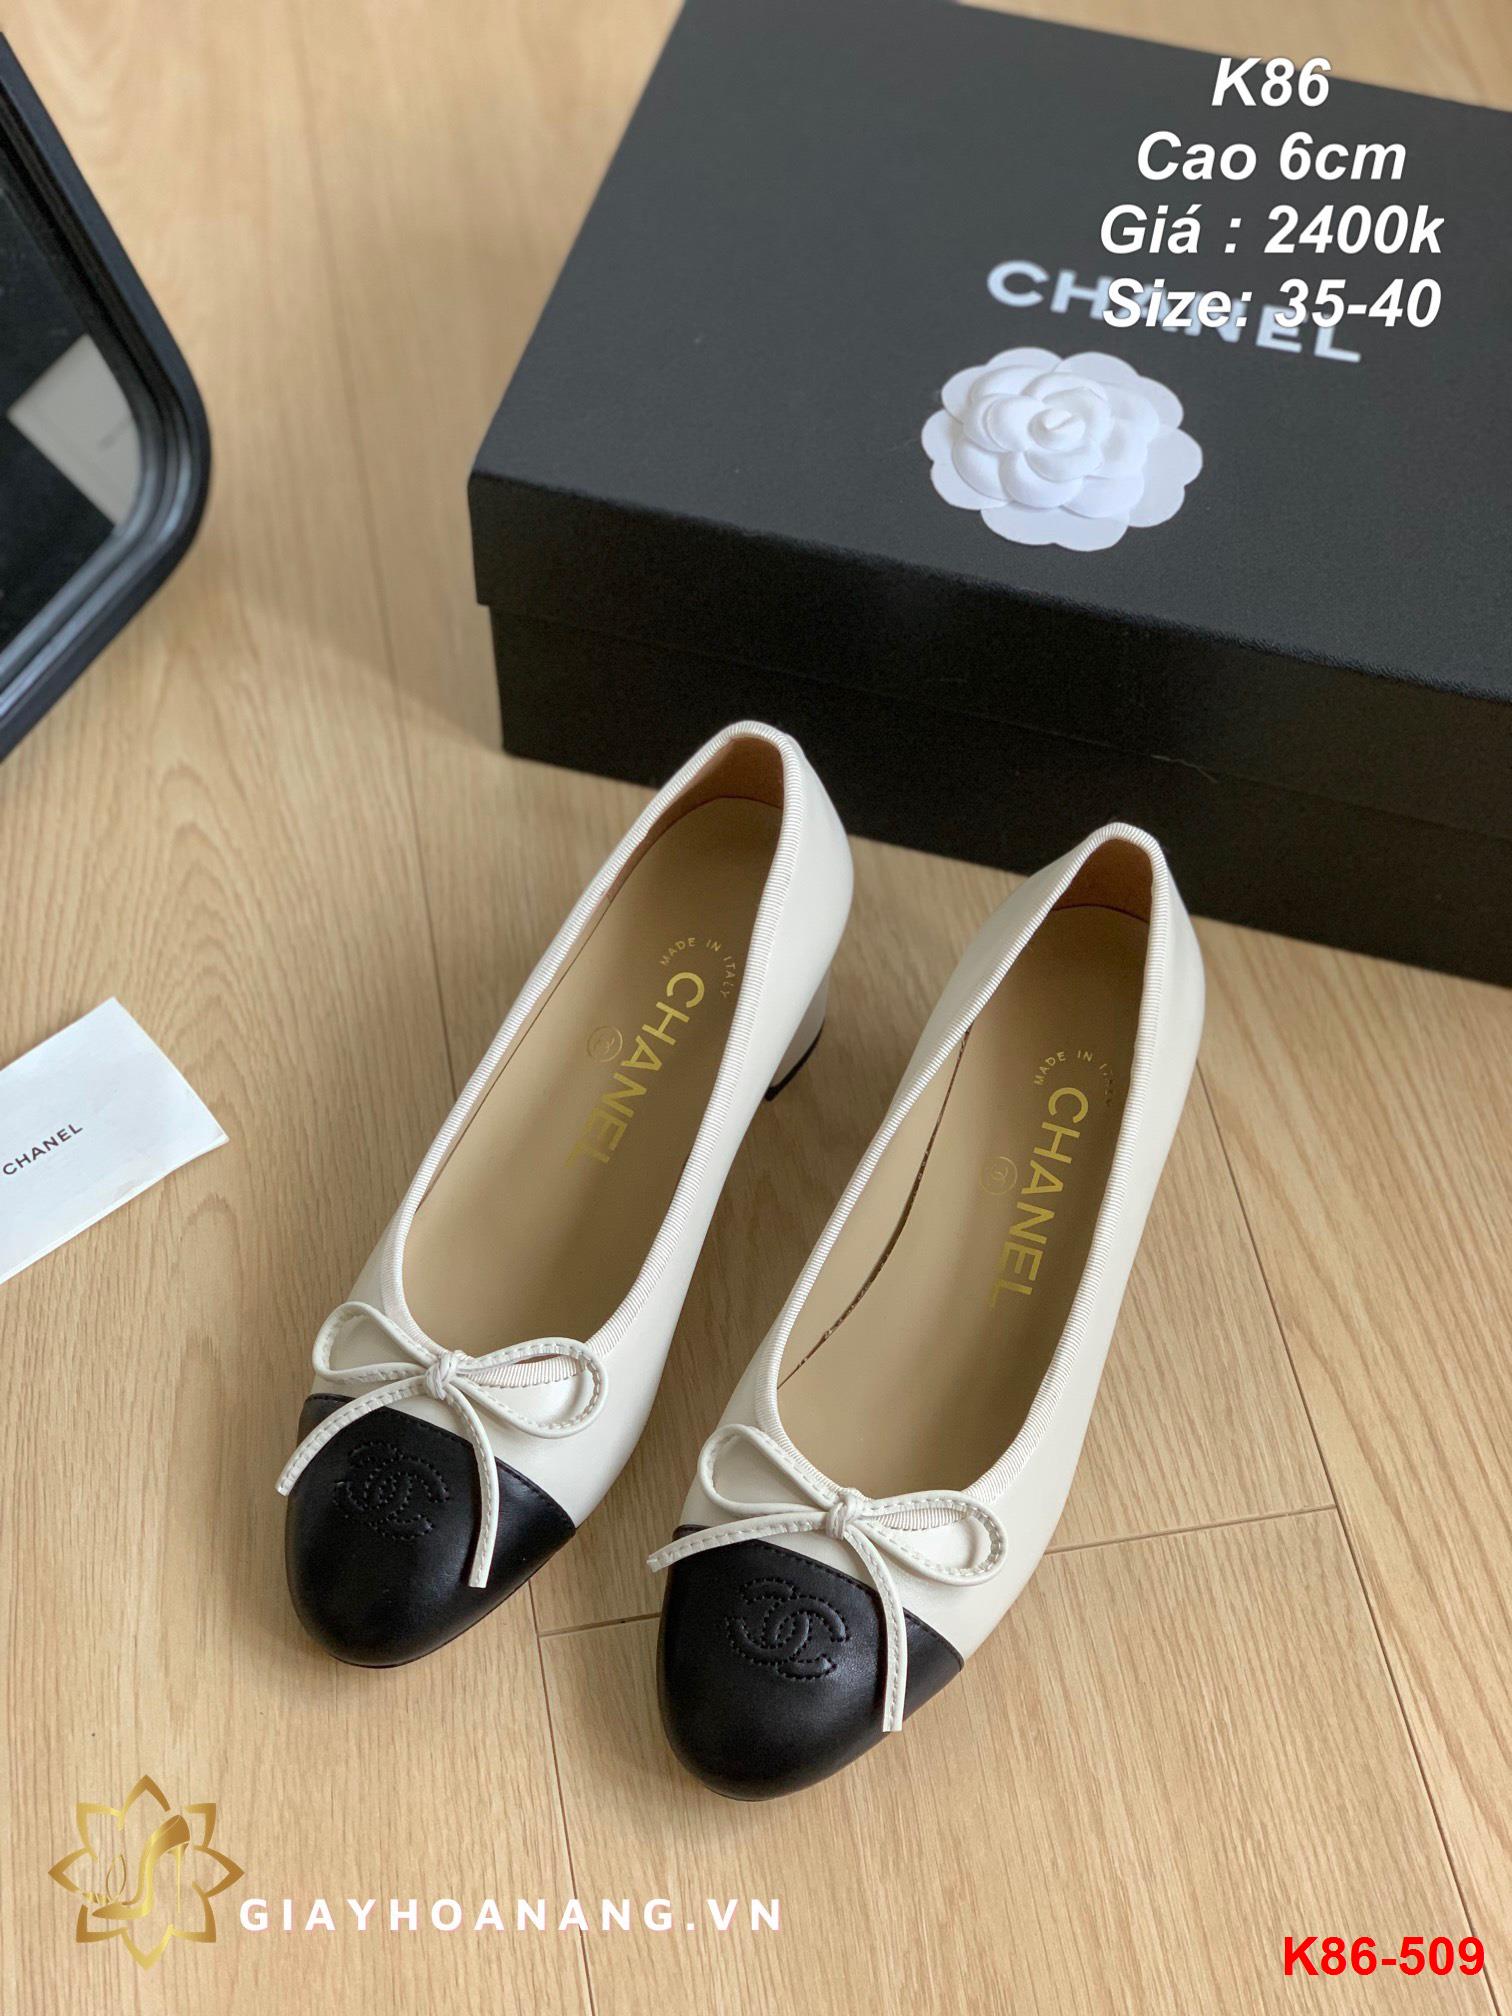 K86-509 Chanel giày cao 6cm siêu cấp